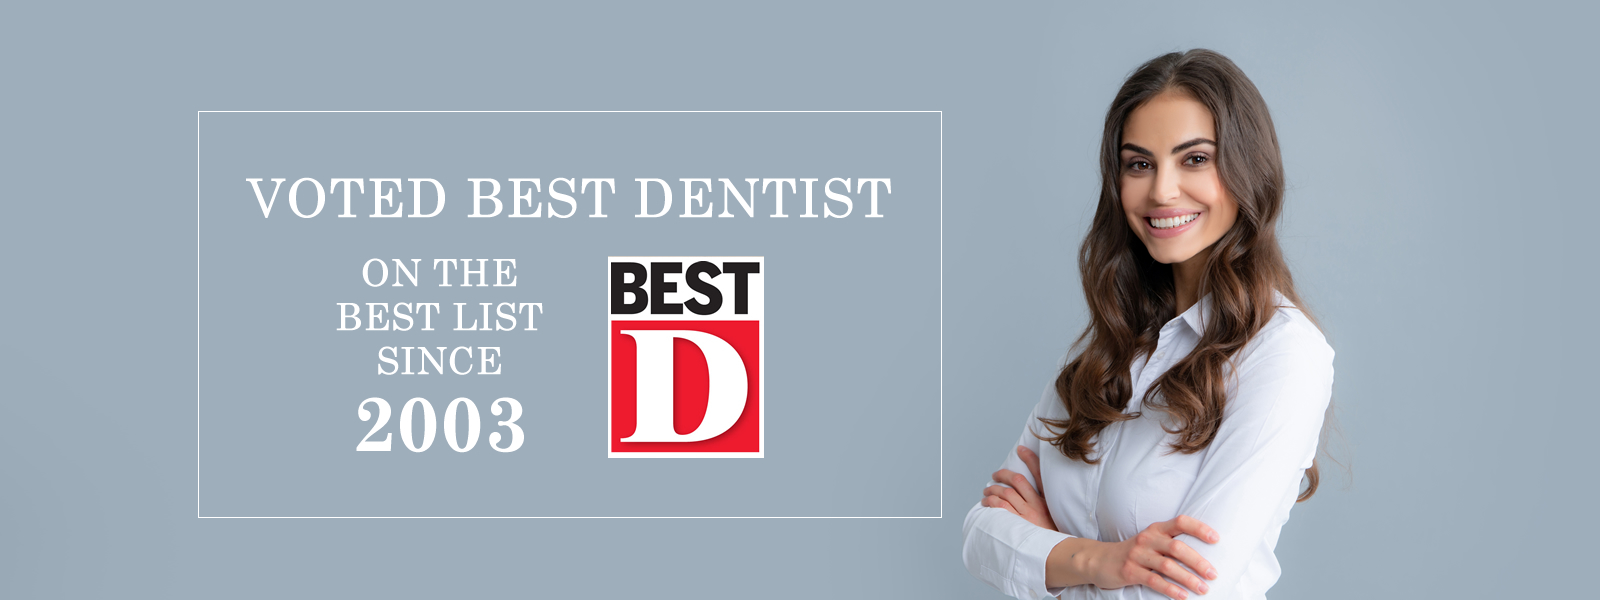 best dentist dallas